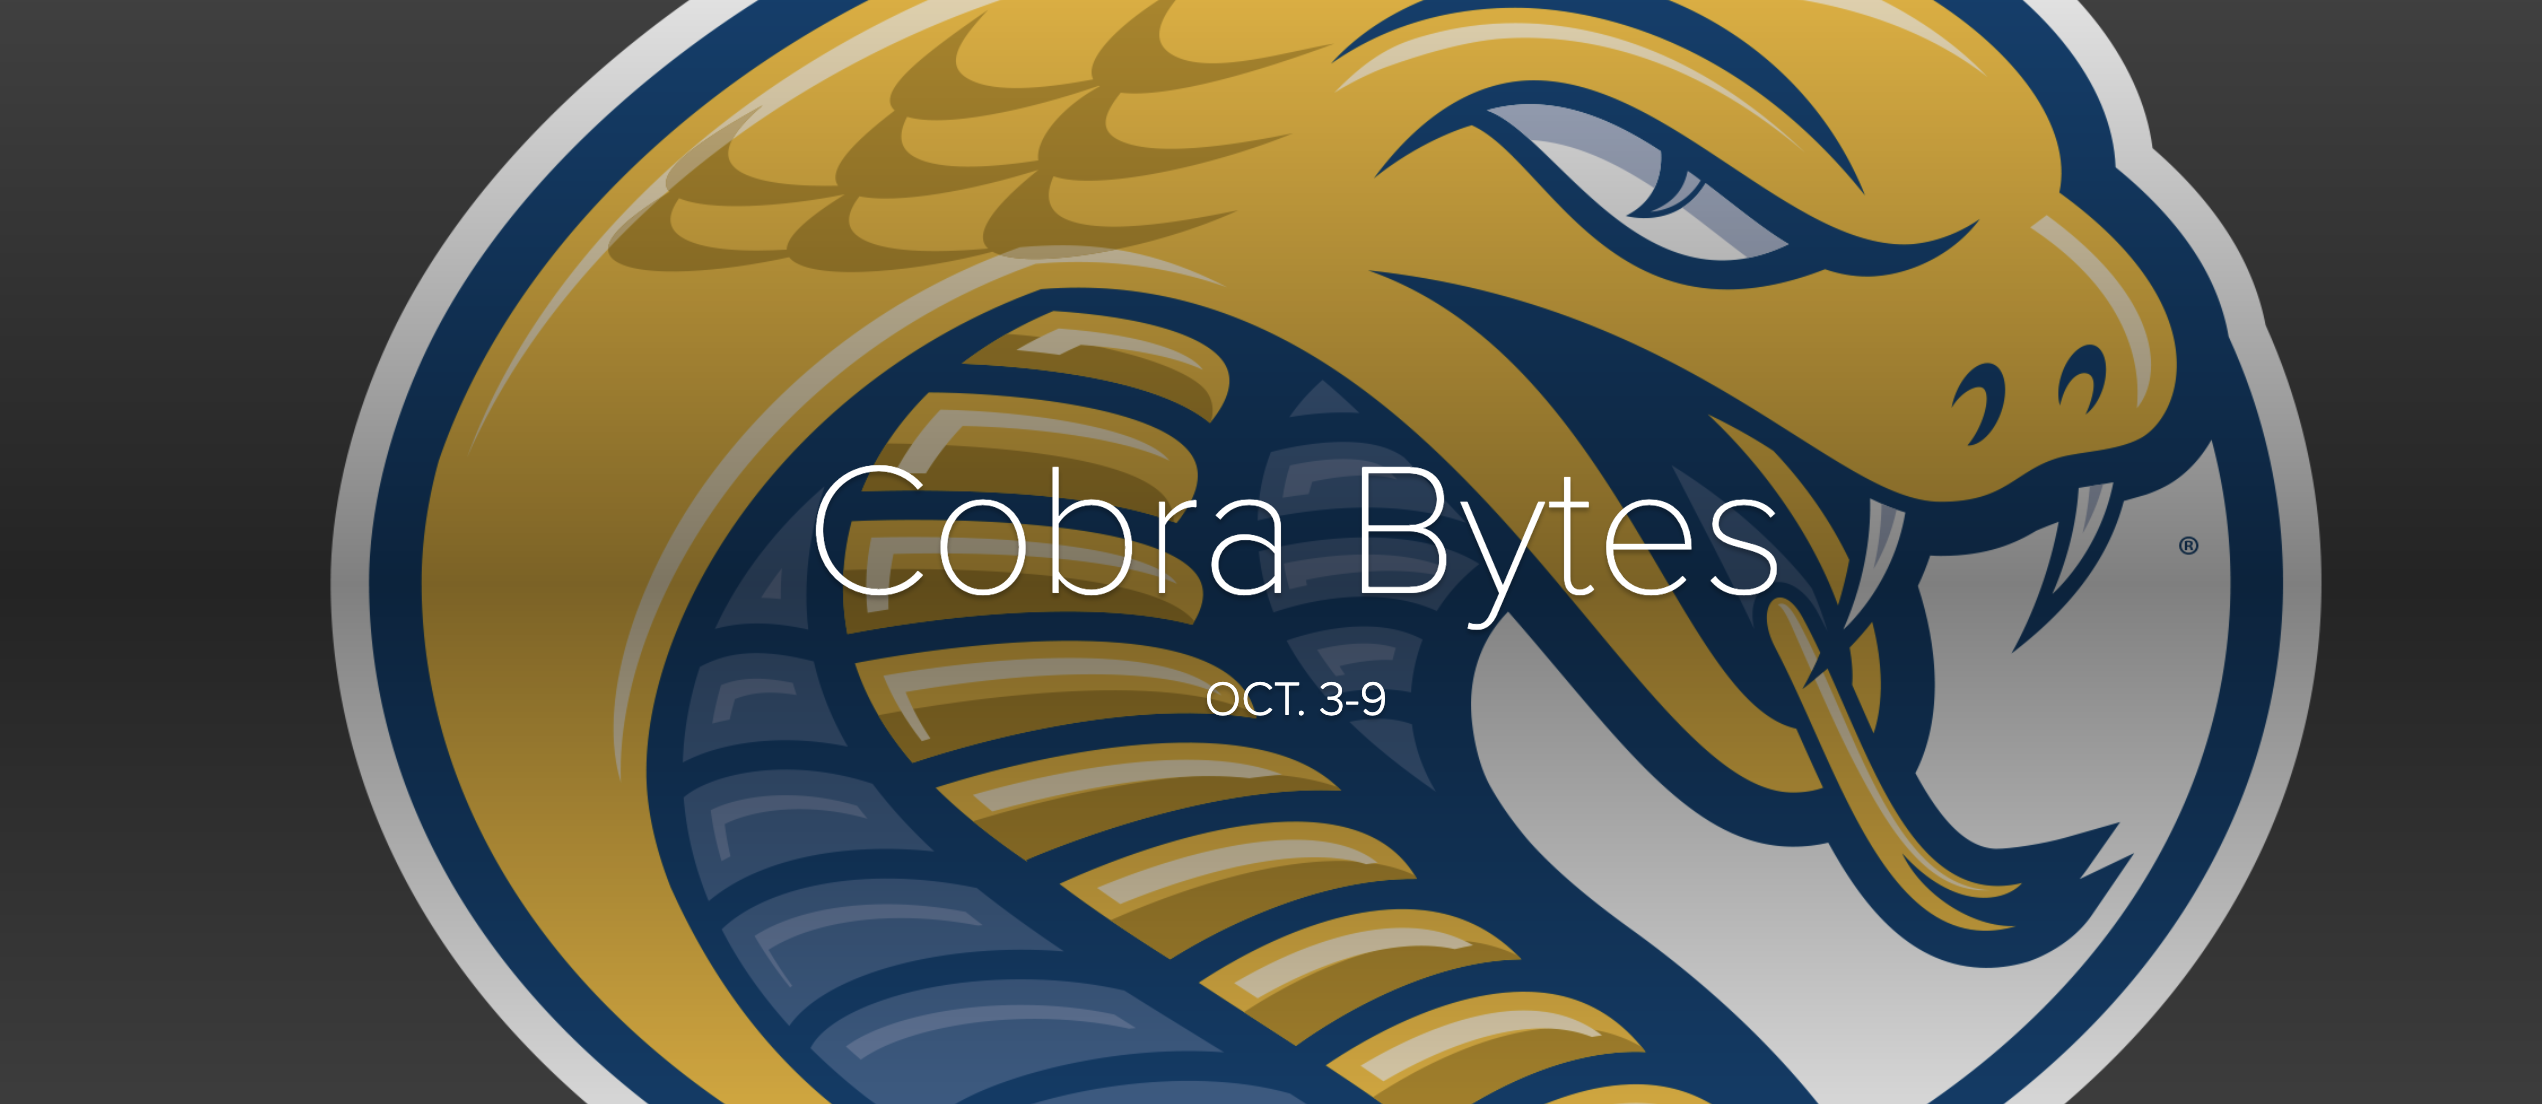 Cobra Bytes Oct. 3-9